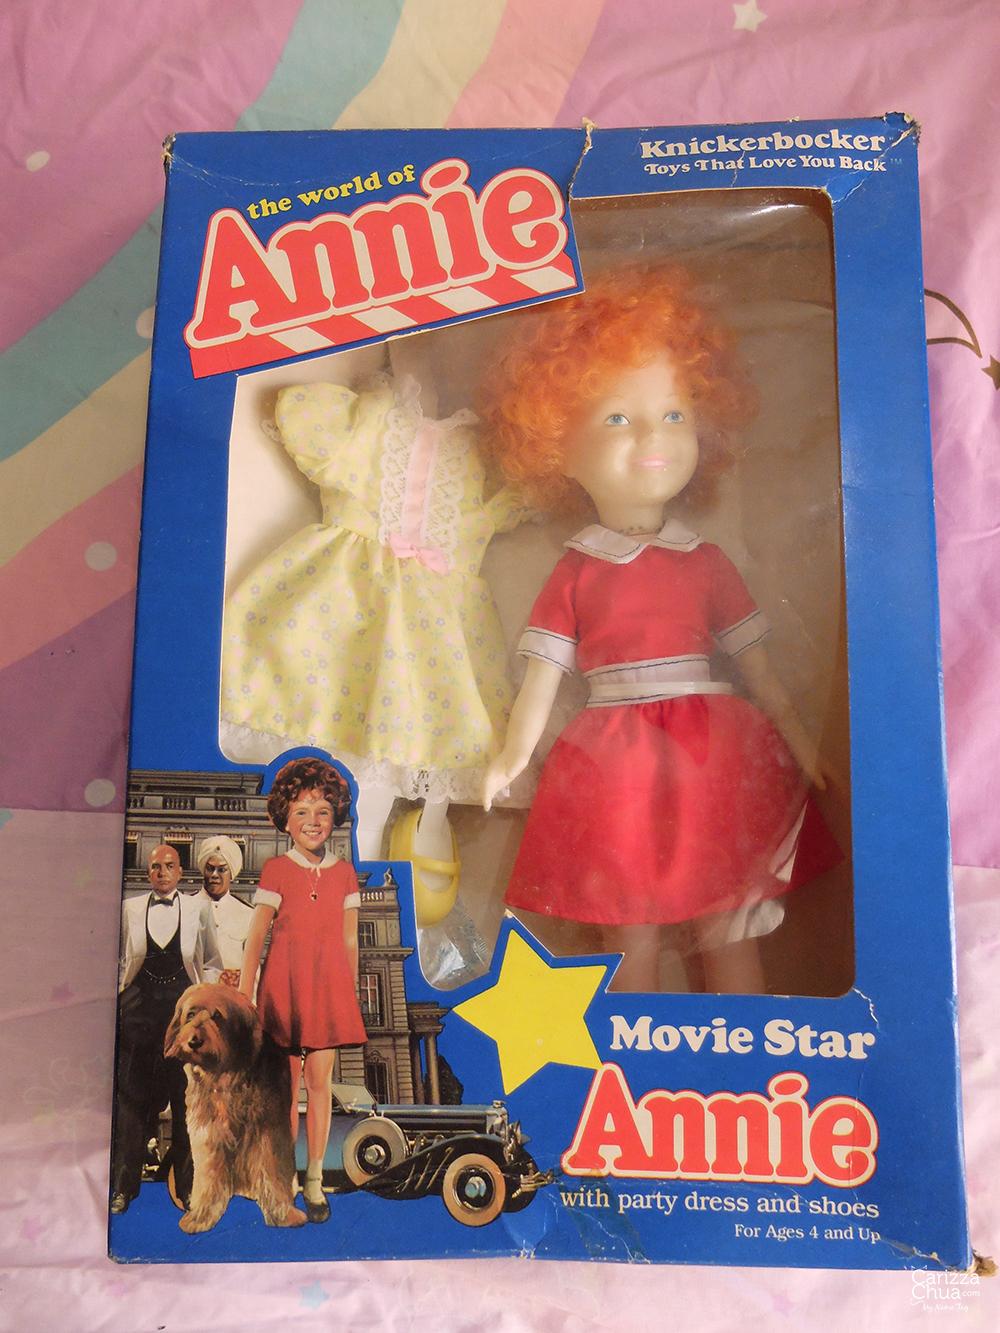 The World of Annie - Movie Star Knickerbocker Doll - Carizza Chua